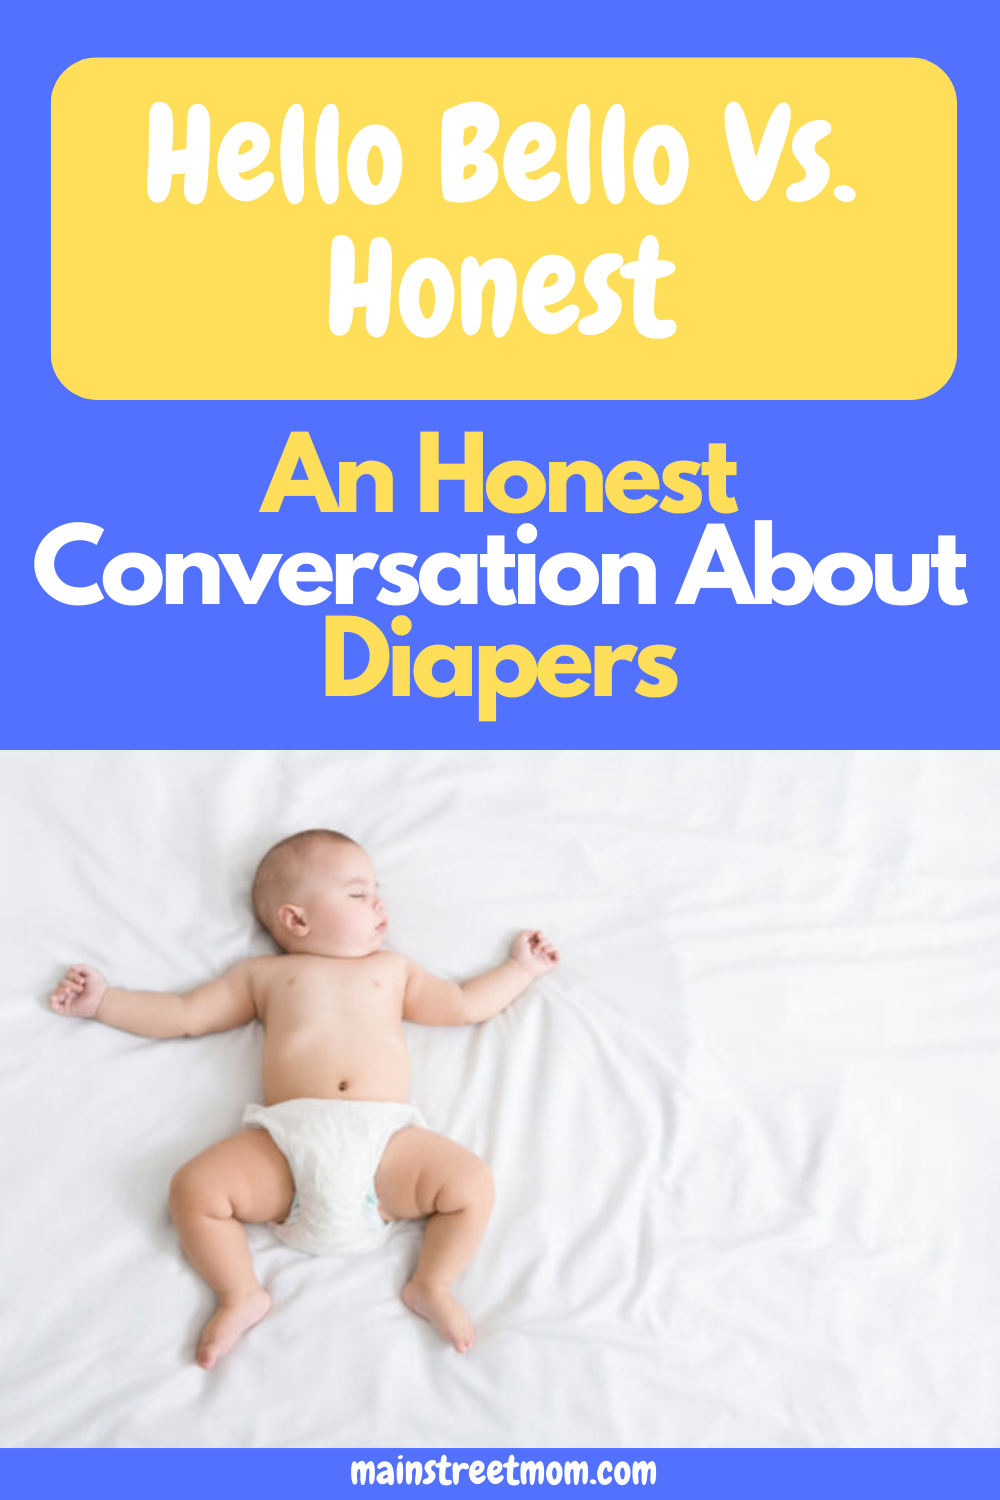 Hello Bello Vs. Honest: An Honest Conversation About Diapers